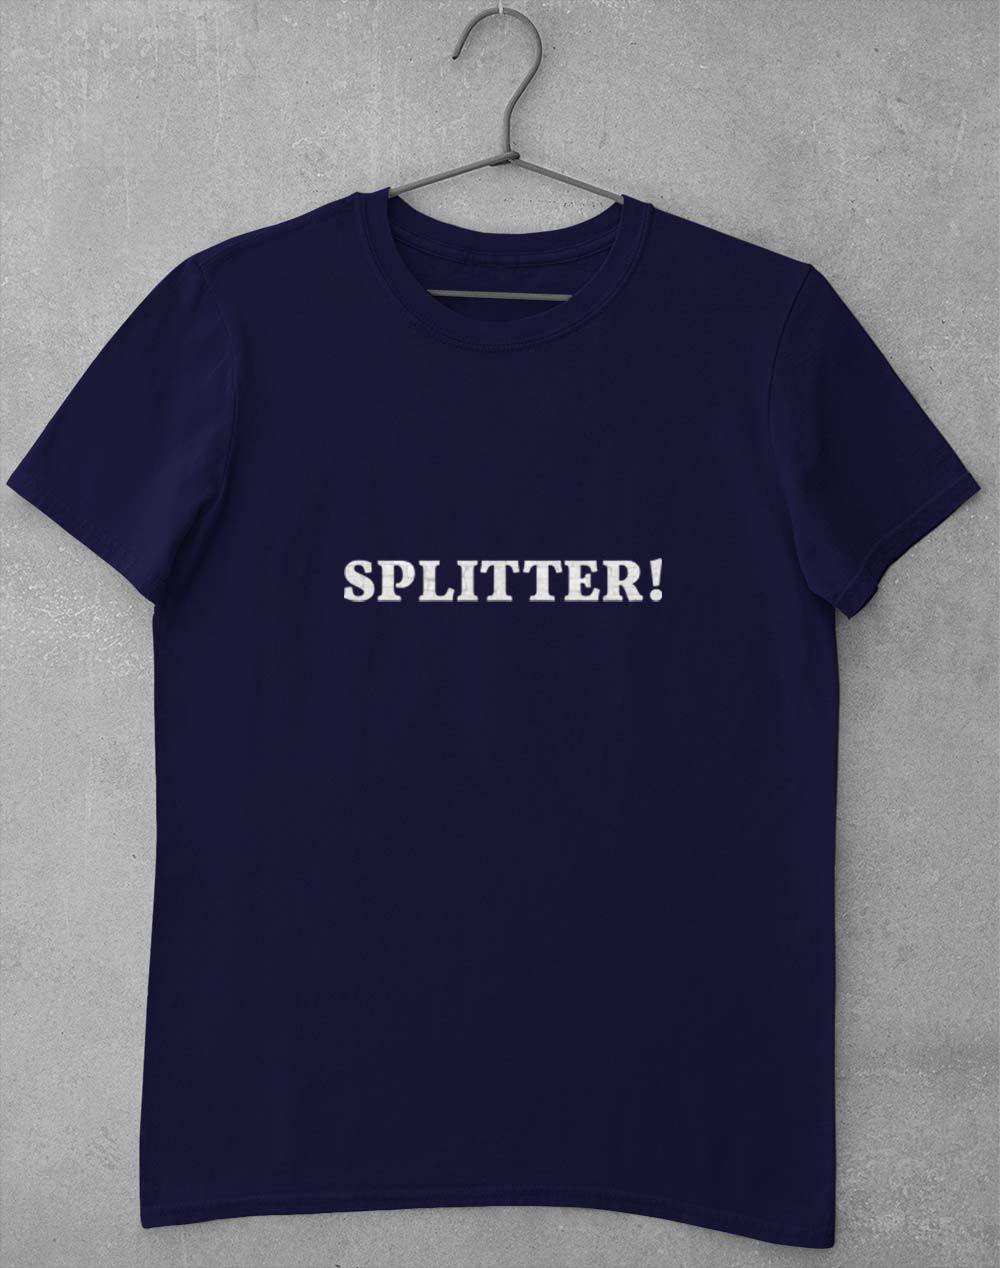 Splitter! T-Shirt S / Navy  - Off World Tees